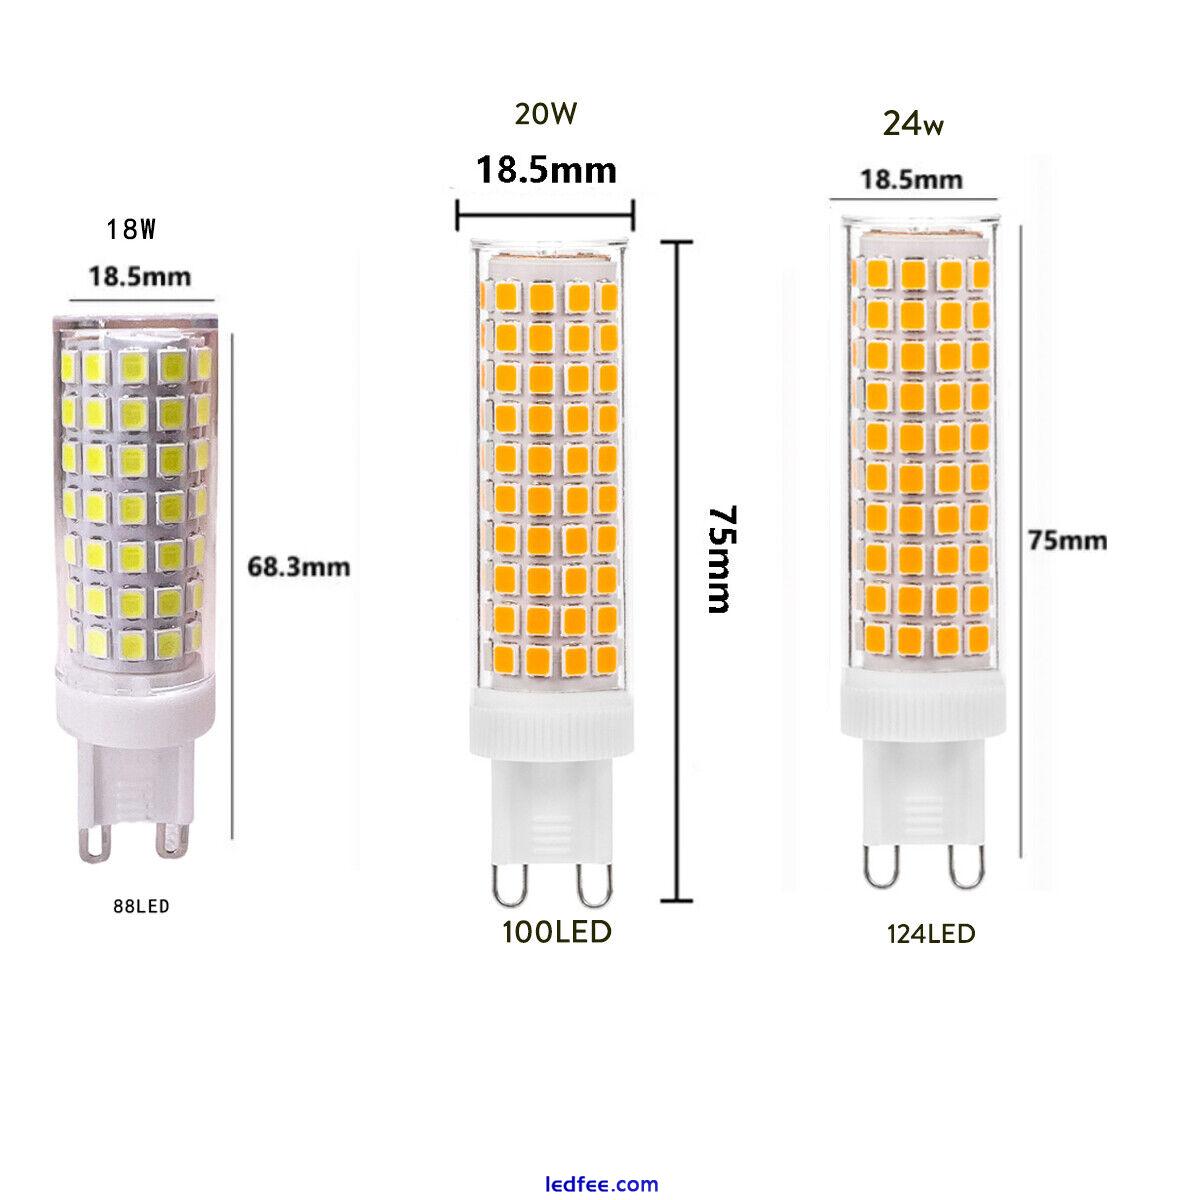 Mini G9 LED Light Bulbs 7W - 24W 220V Ceramic 2835 SMD Replace 100W Halogen Lamp 1 